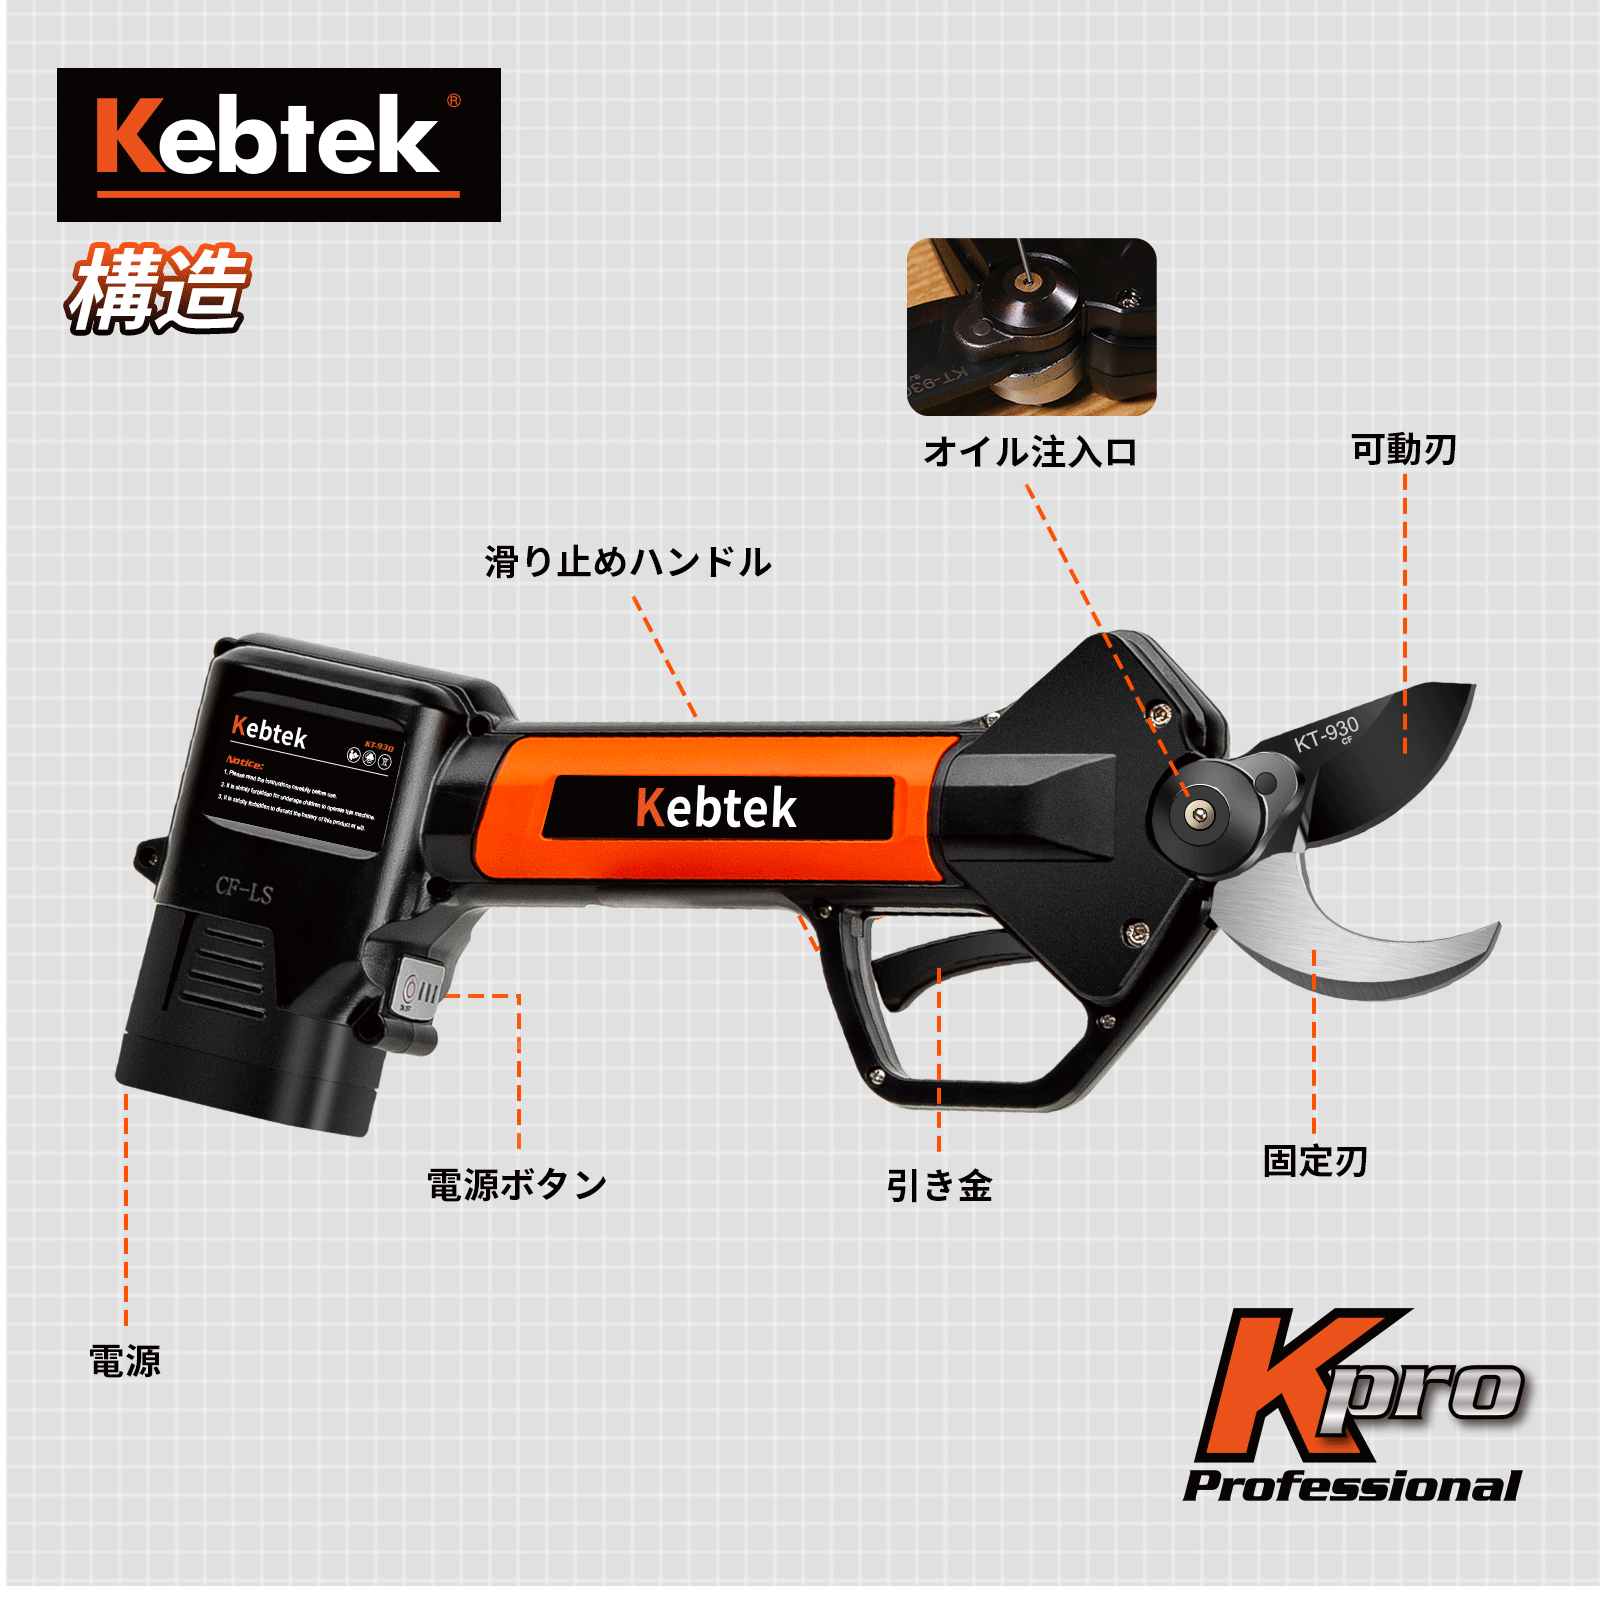 Kebtek 電動剪定バサミ30mm 品番KT-930